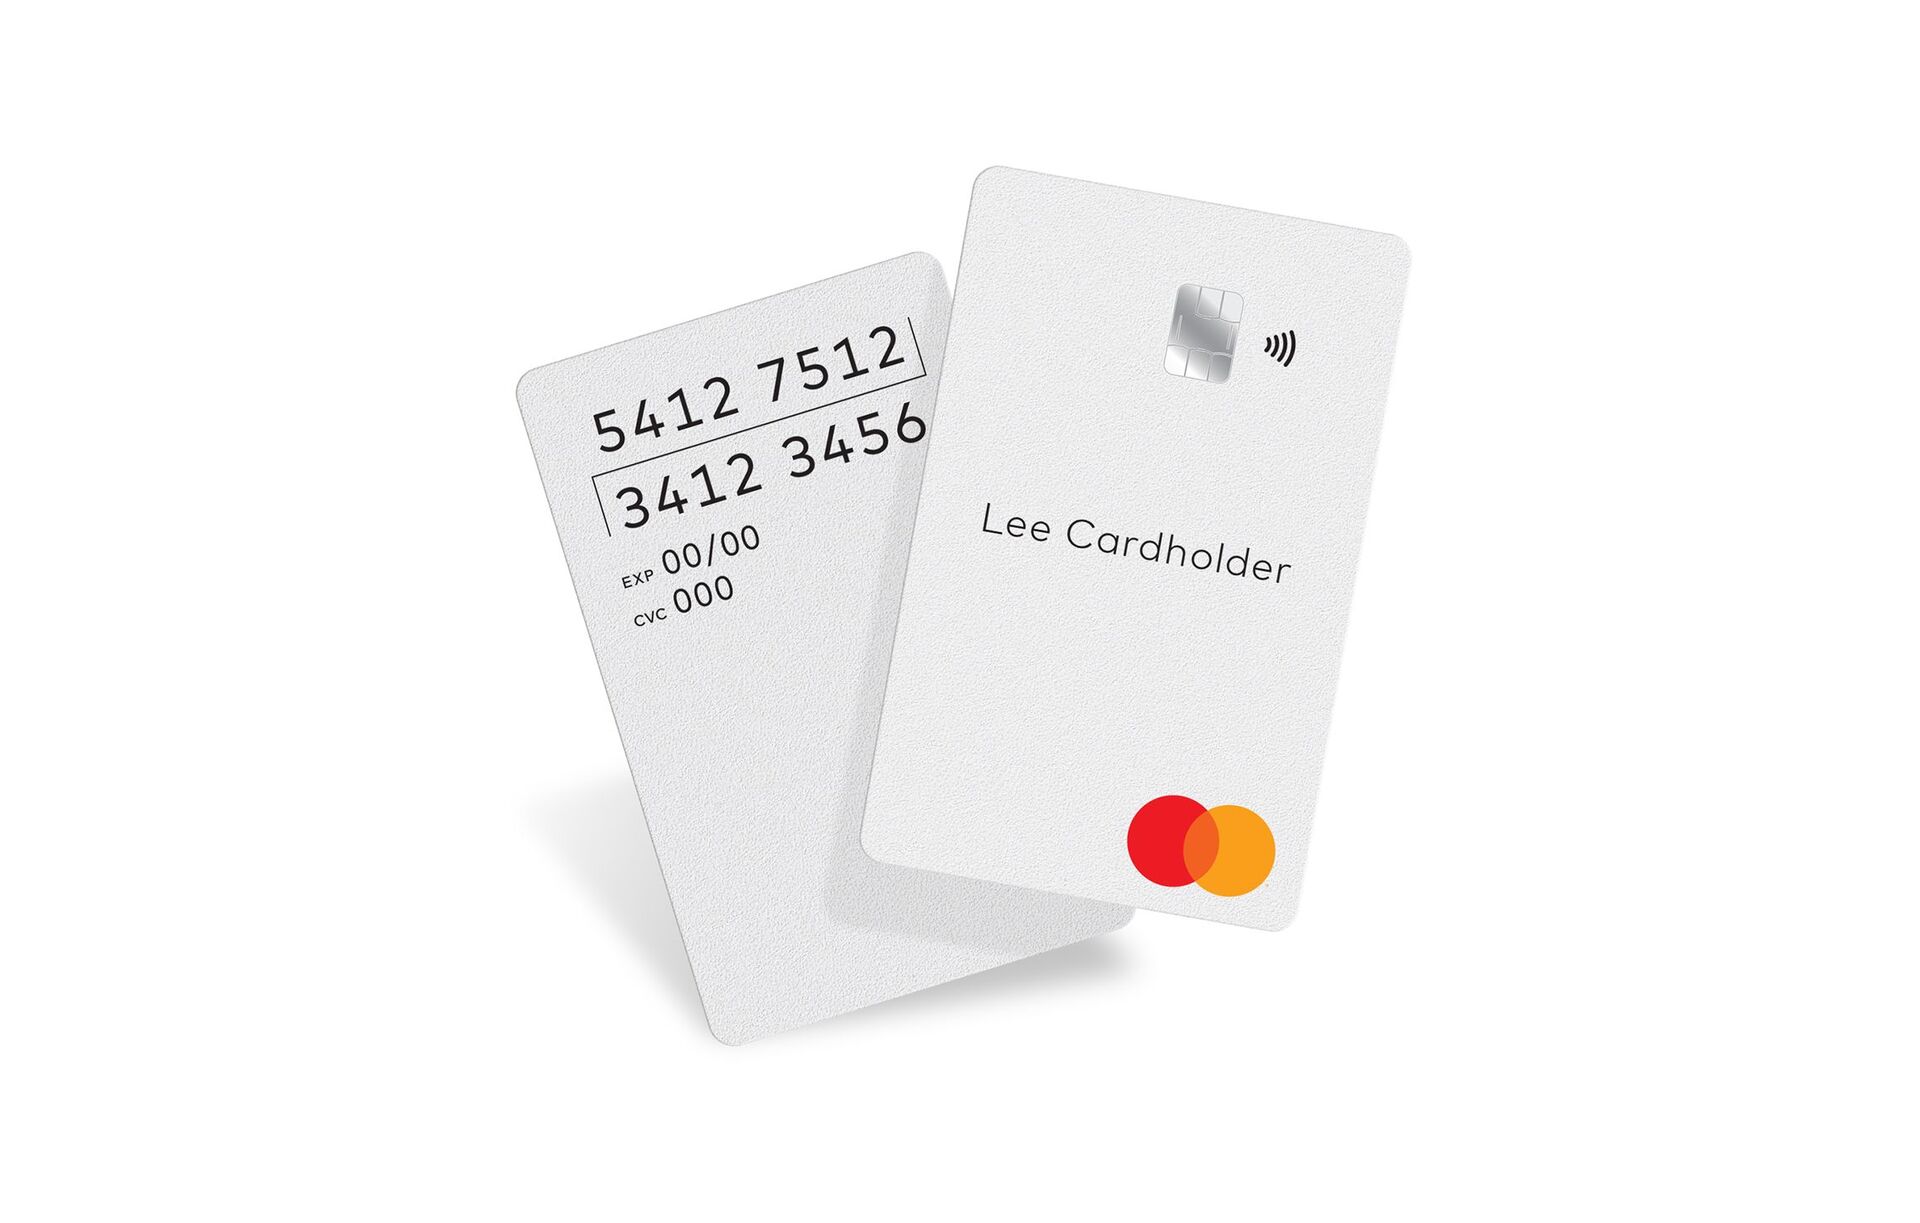 platební karta Mastercard